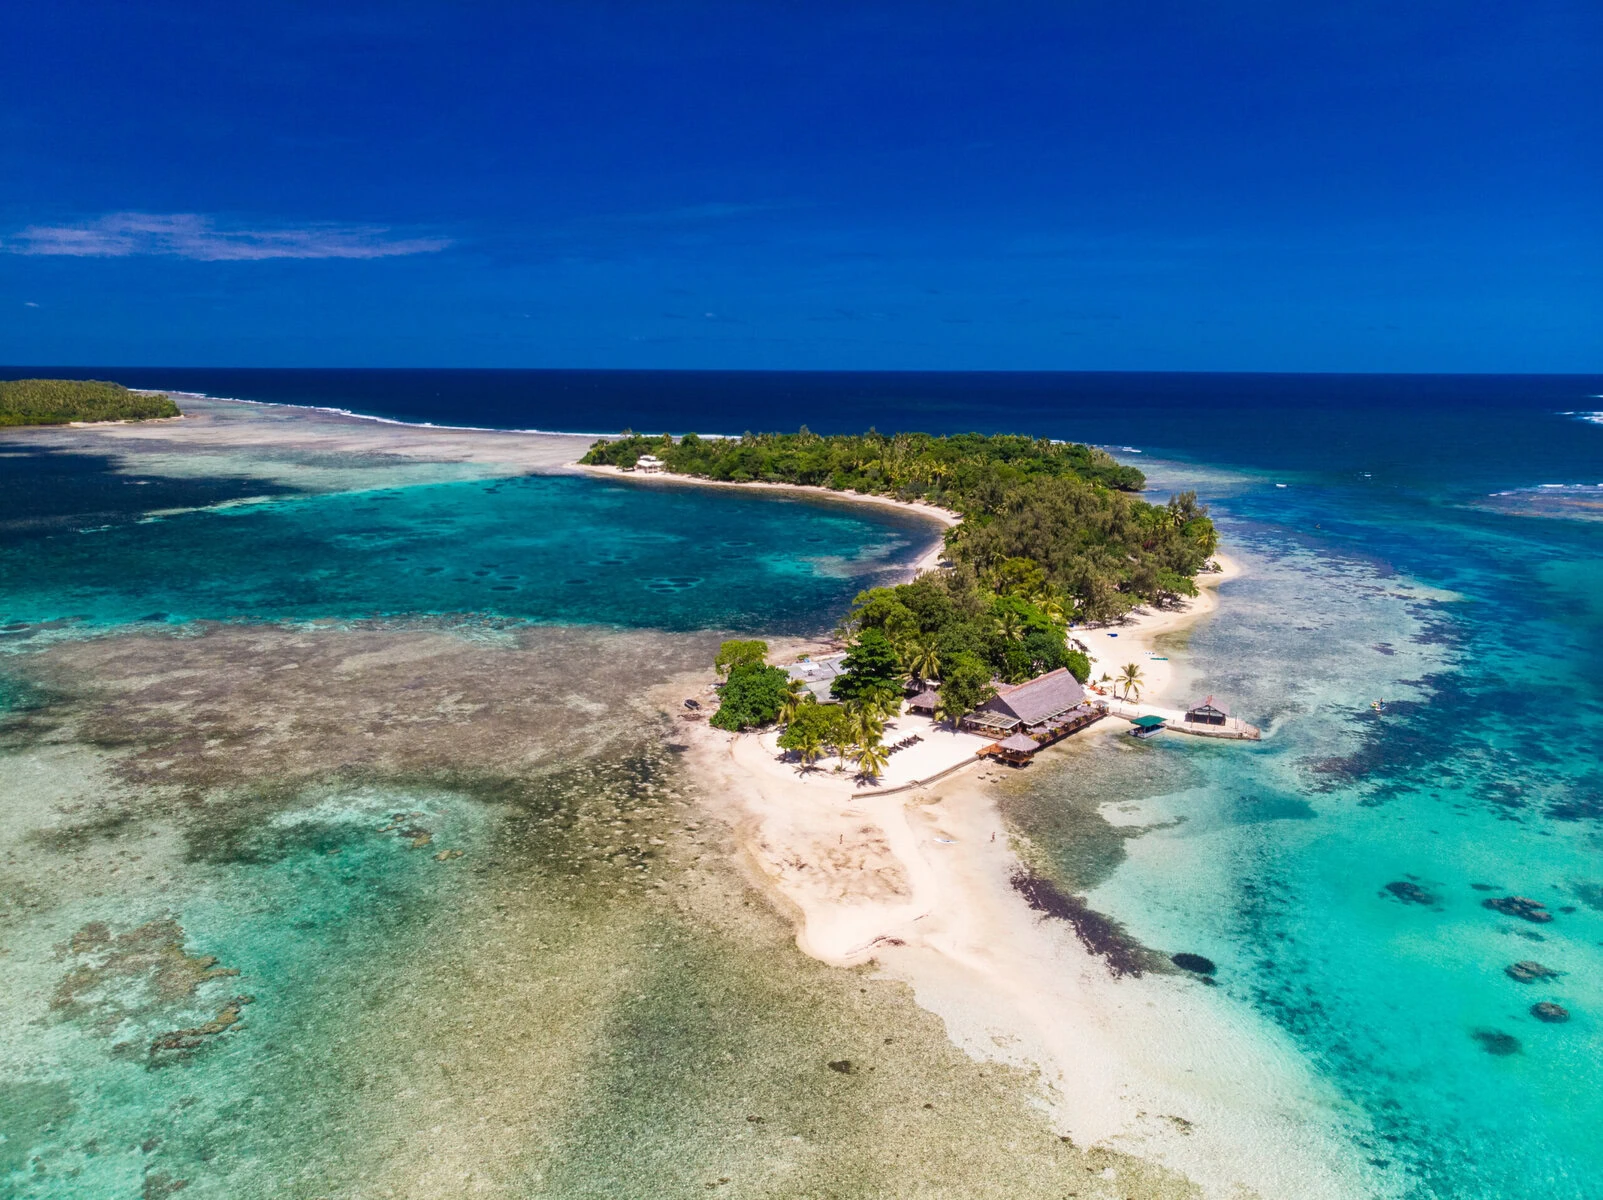 Drone view of Erakor Island, near Port Vila in Vanuatu.